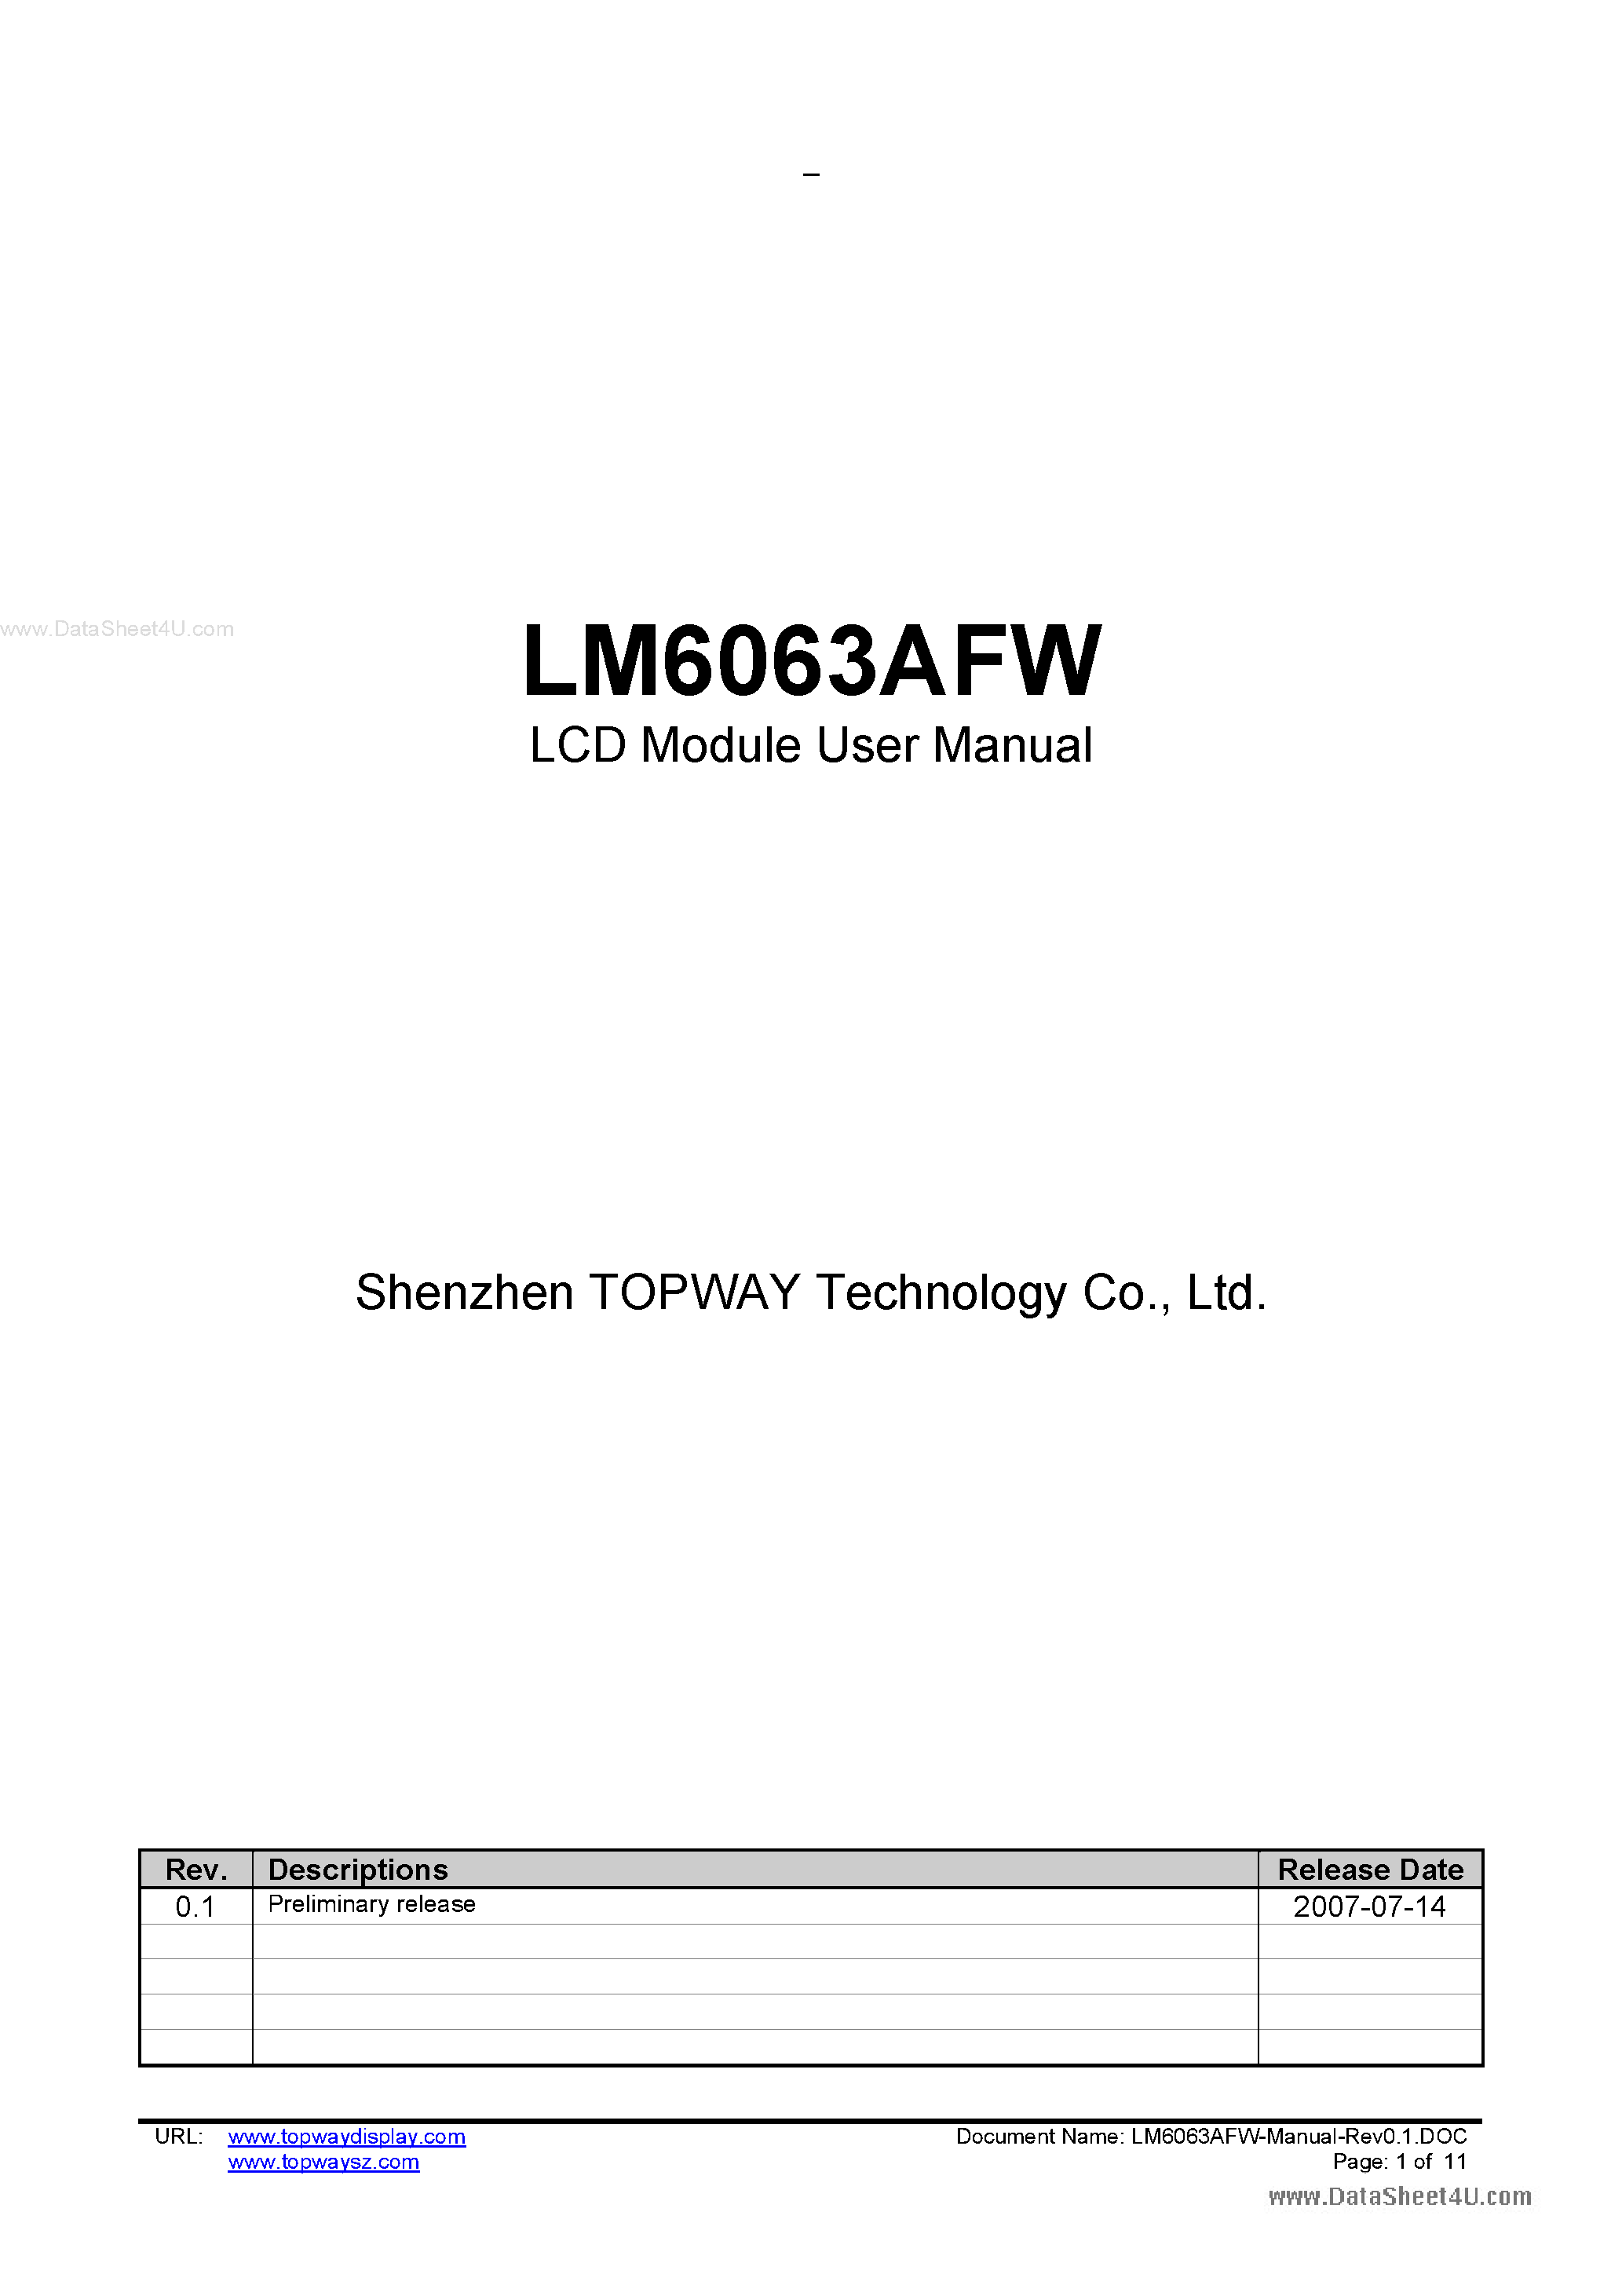 Даташит LM6063AFW - LCD Module страница 1